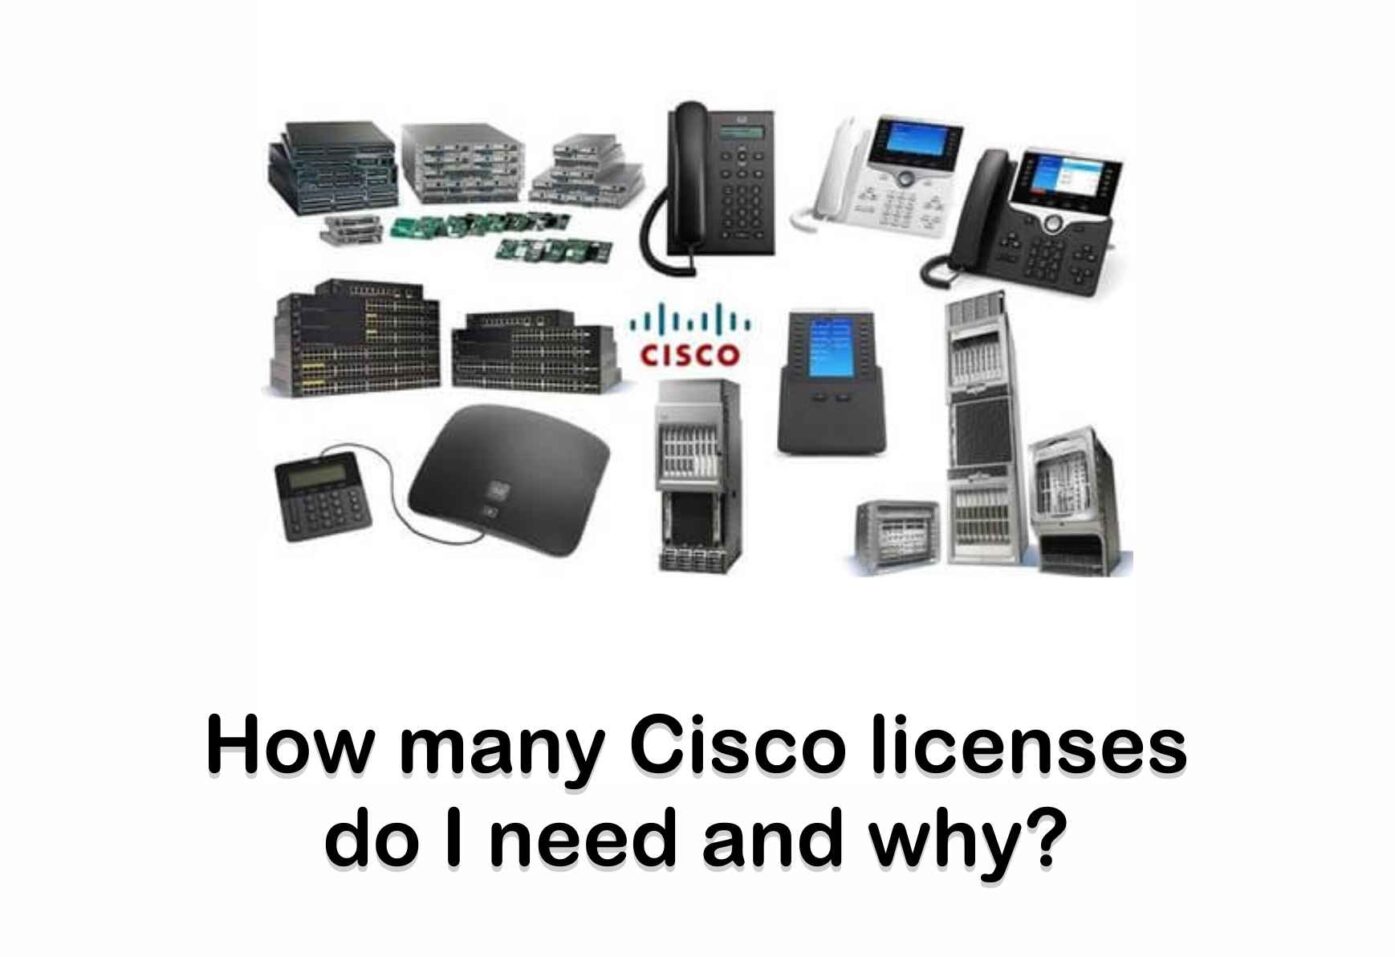 Cisco licenses